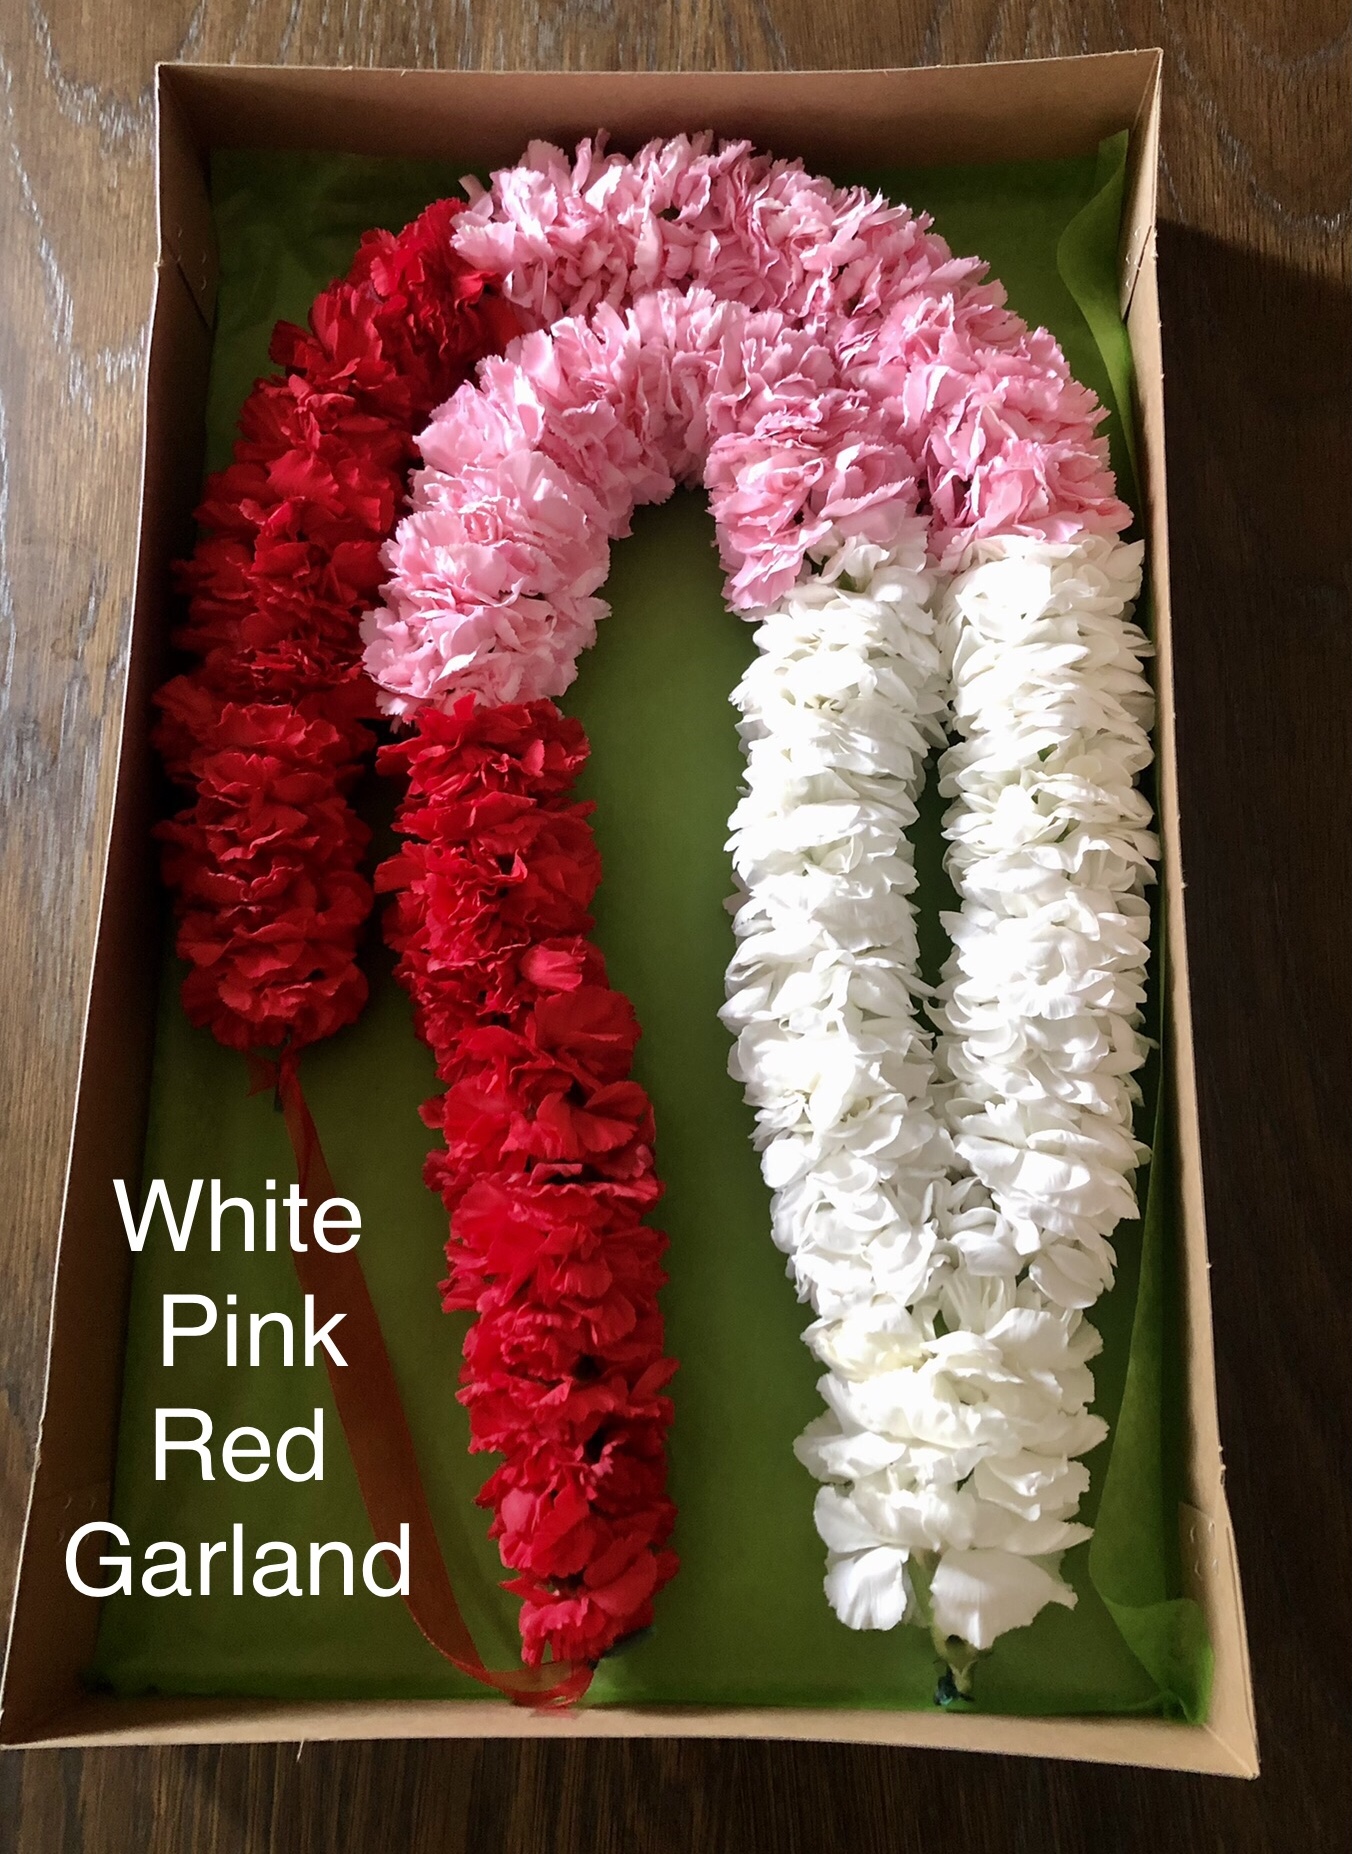 WHITE PINK RED GARLAND $90